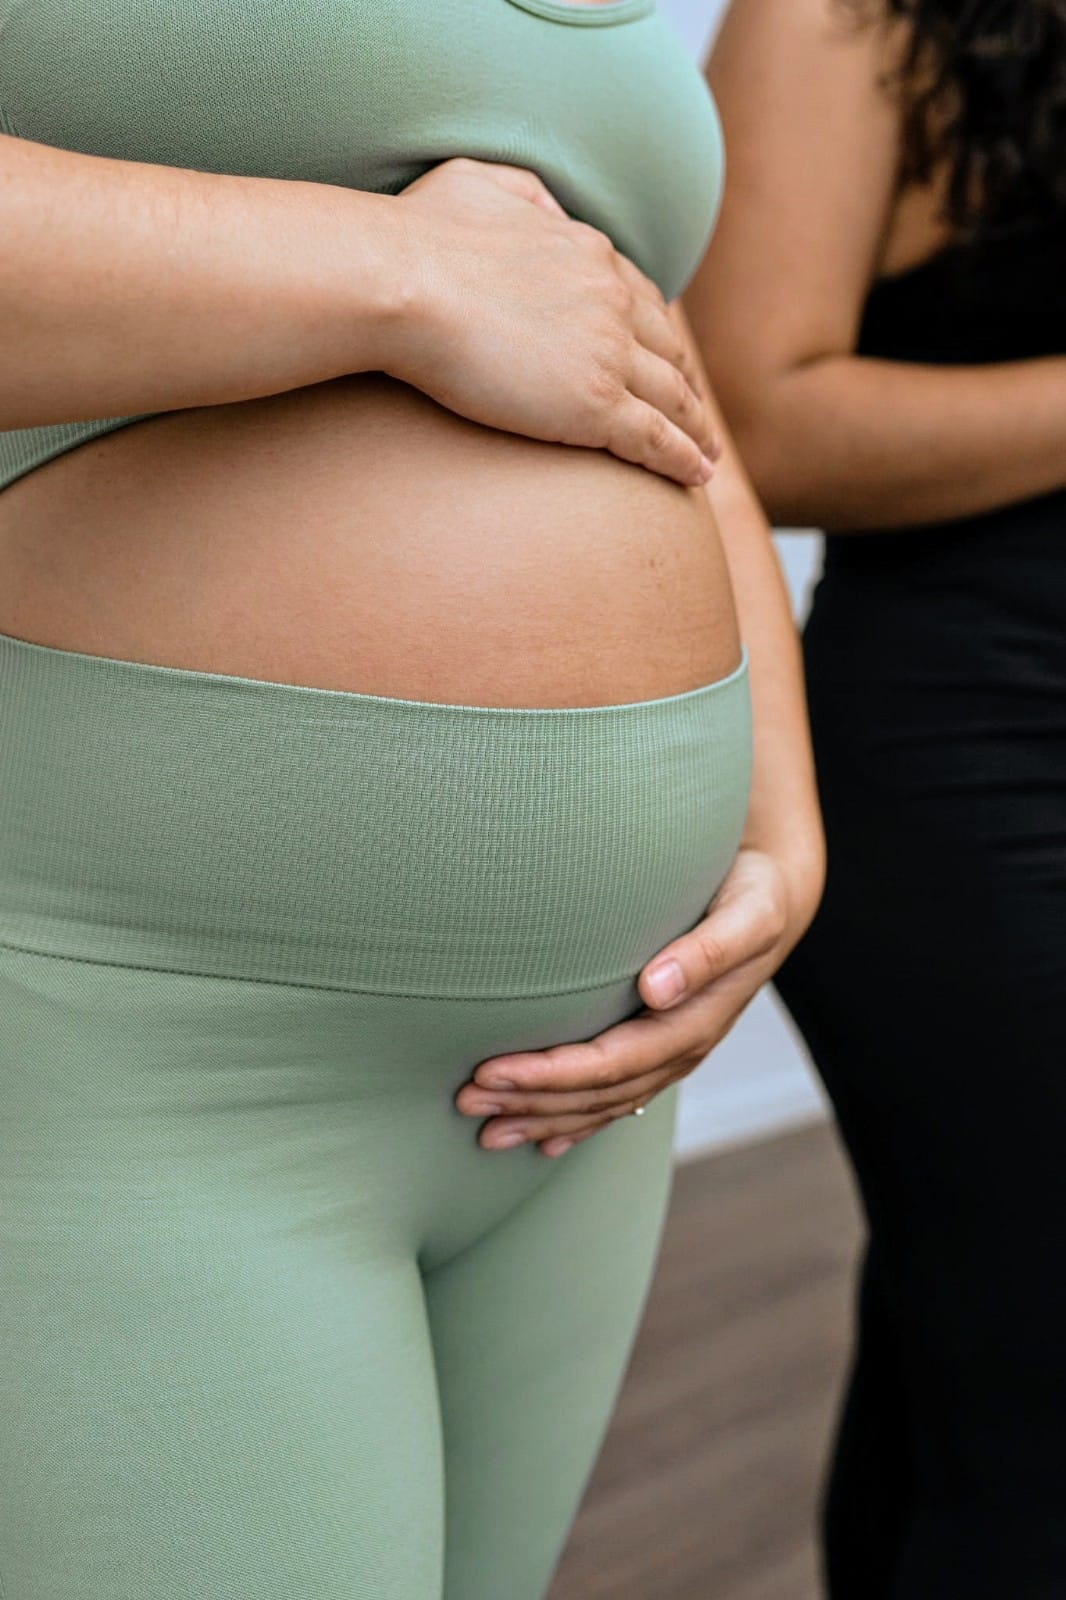 Yoga in Pregnancy: Serene Balance